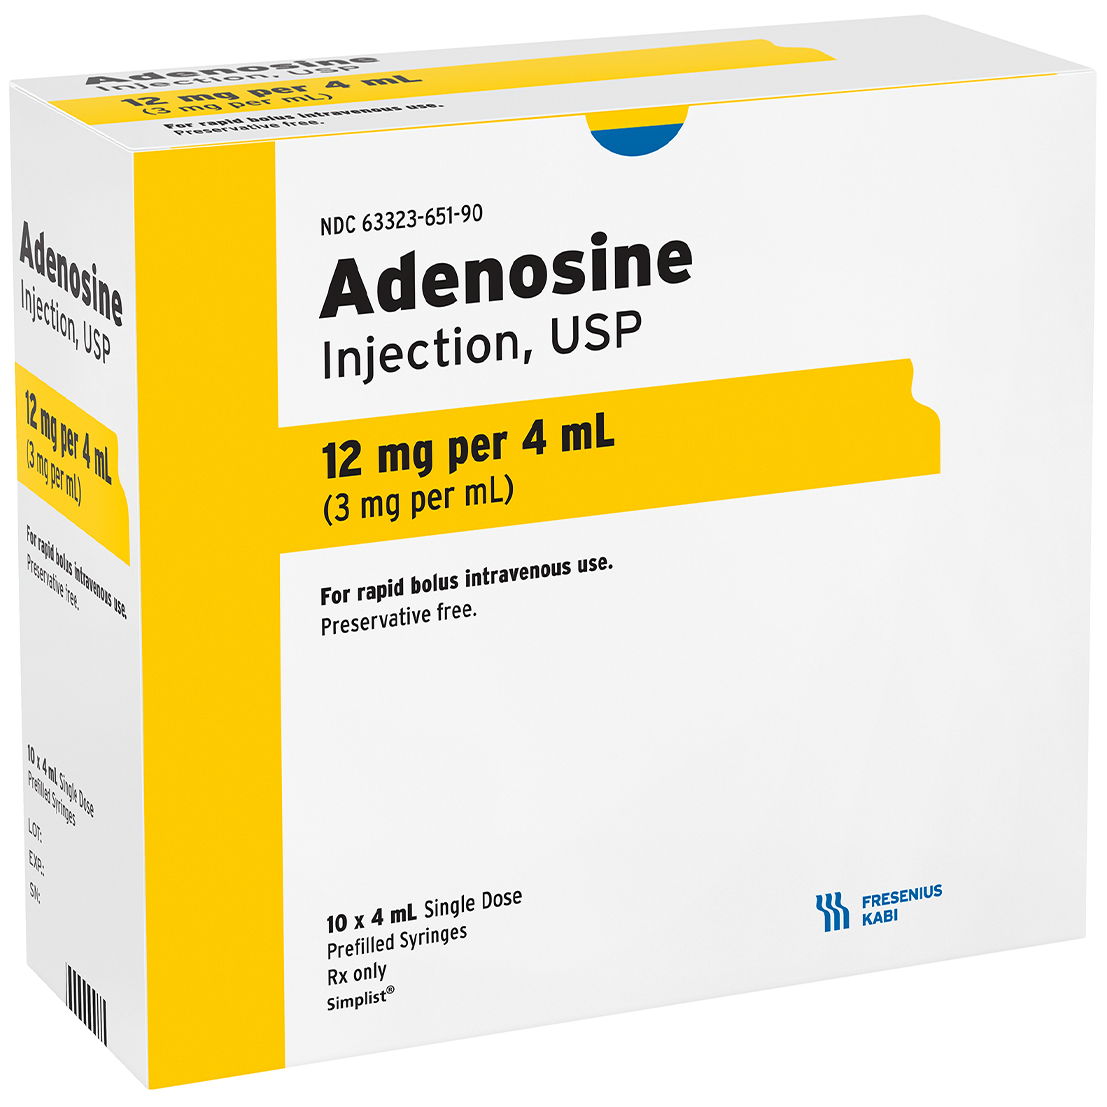 Volume Carton image for 12 mg per 4 mL of Adenosine